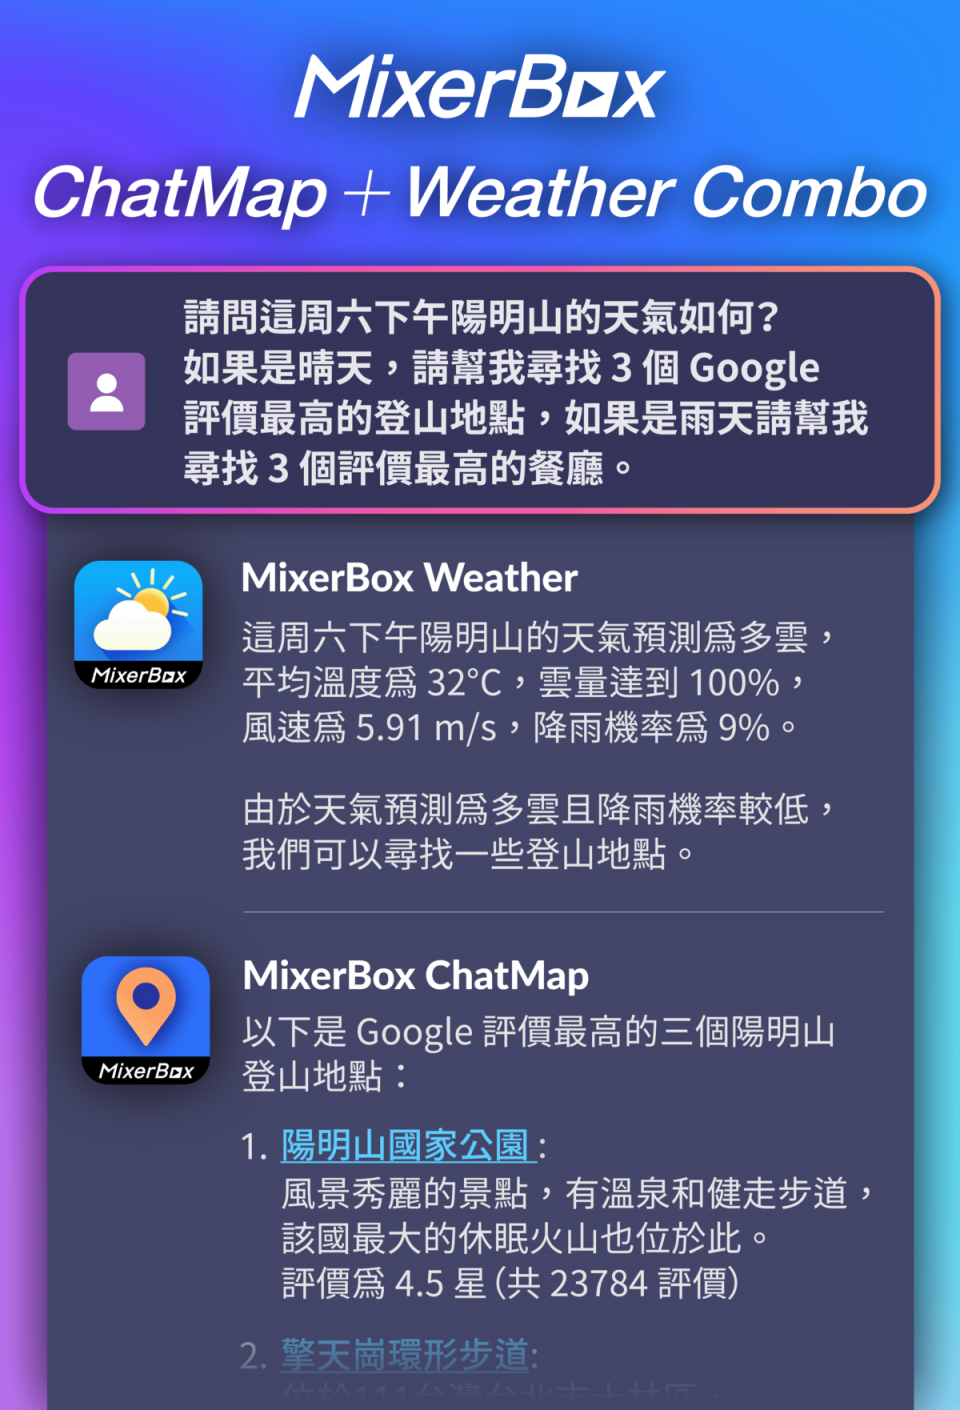 ChatMap 還可搭配其它外掛一起使用，使用戶能獲得更精準的答案。